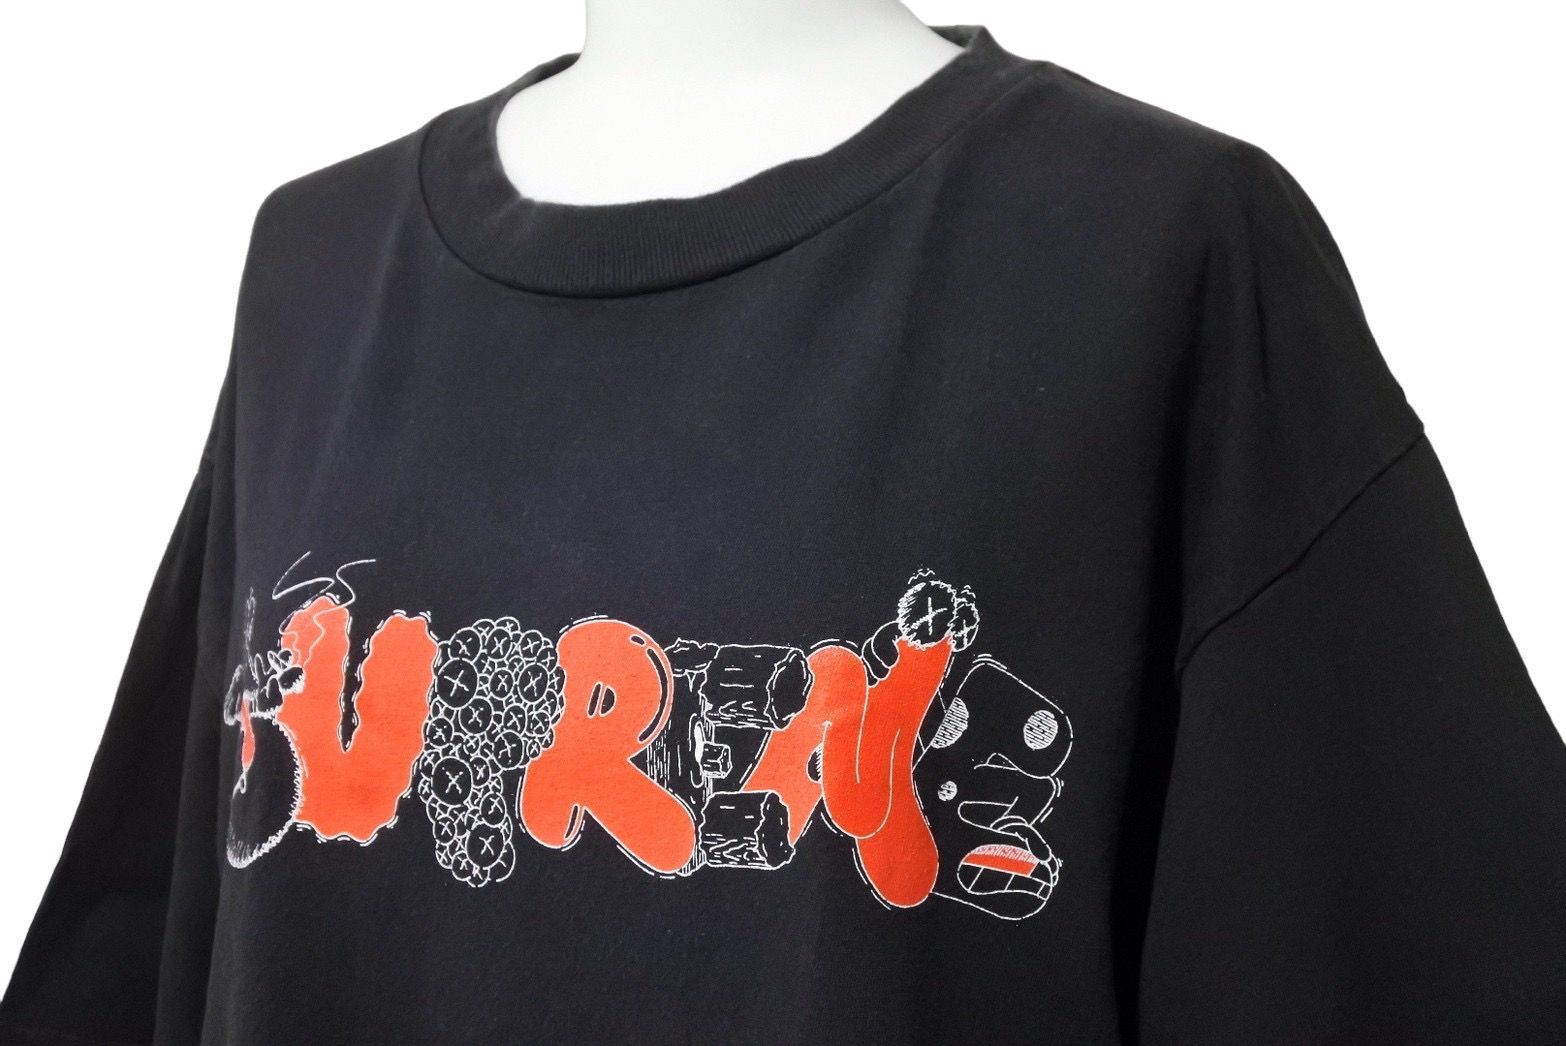 Supreme シュプリーム × Original Fake オリジナルフェイク 11ss KAWS カウズ ロゴ 半袖Tシャツ ブラック レッド  良品 中古 47662